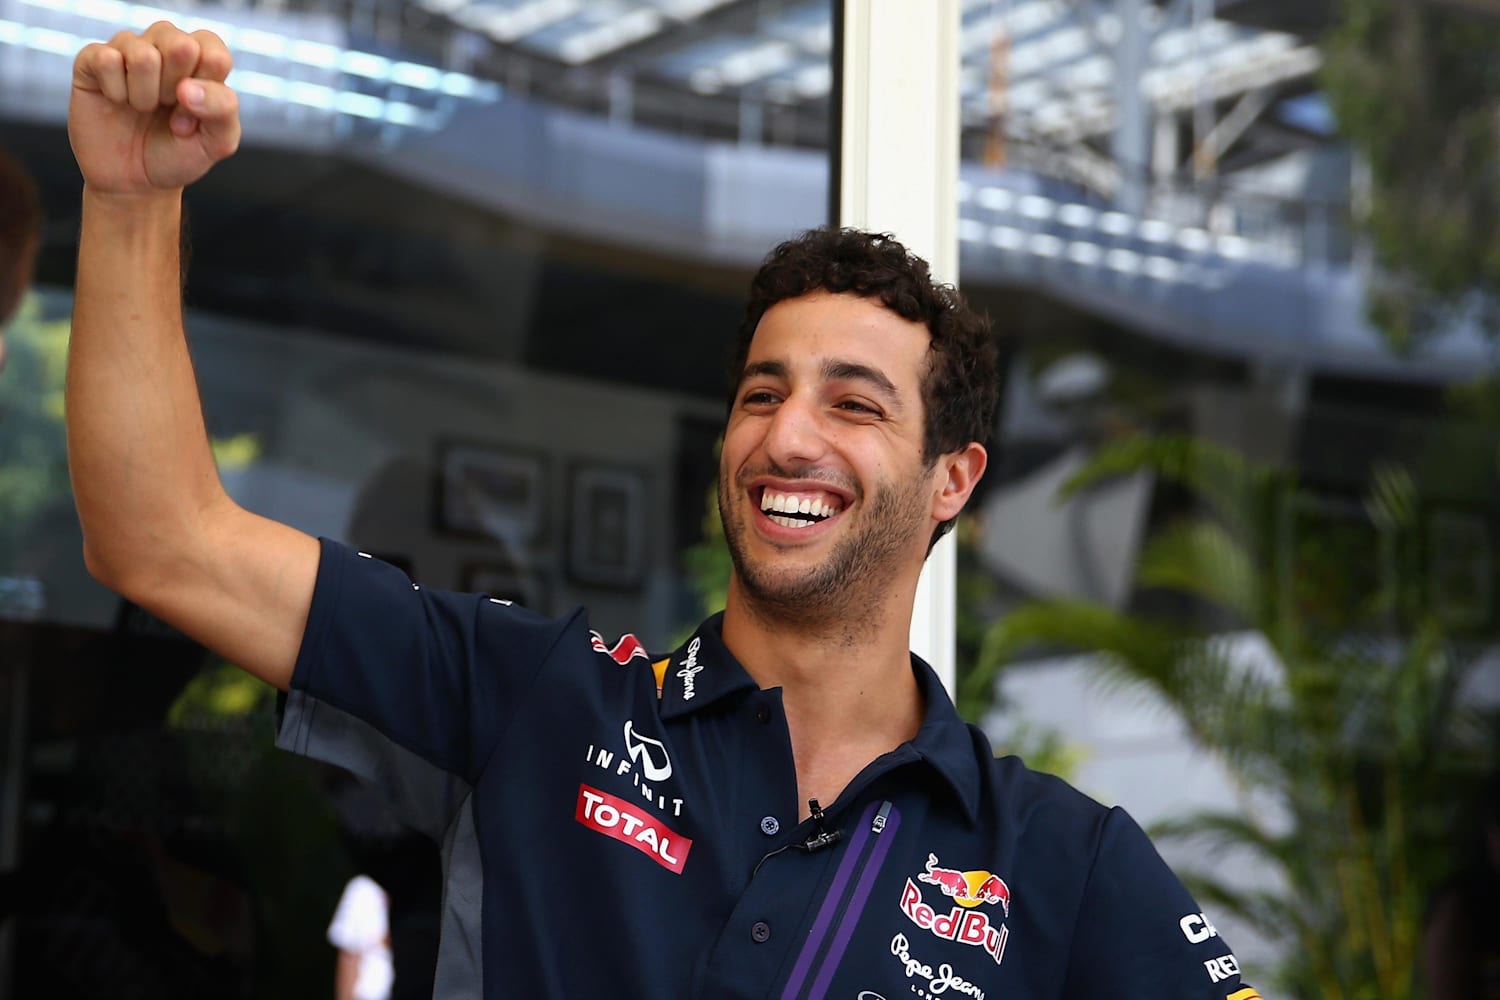 Daniel Ricciardo playlist of his favourite tracks